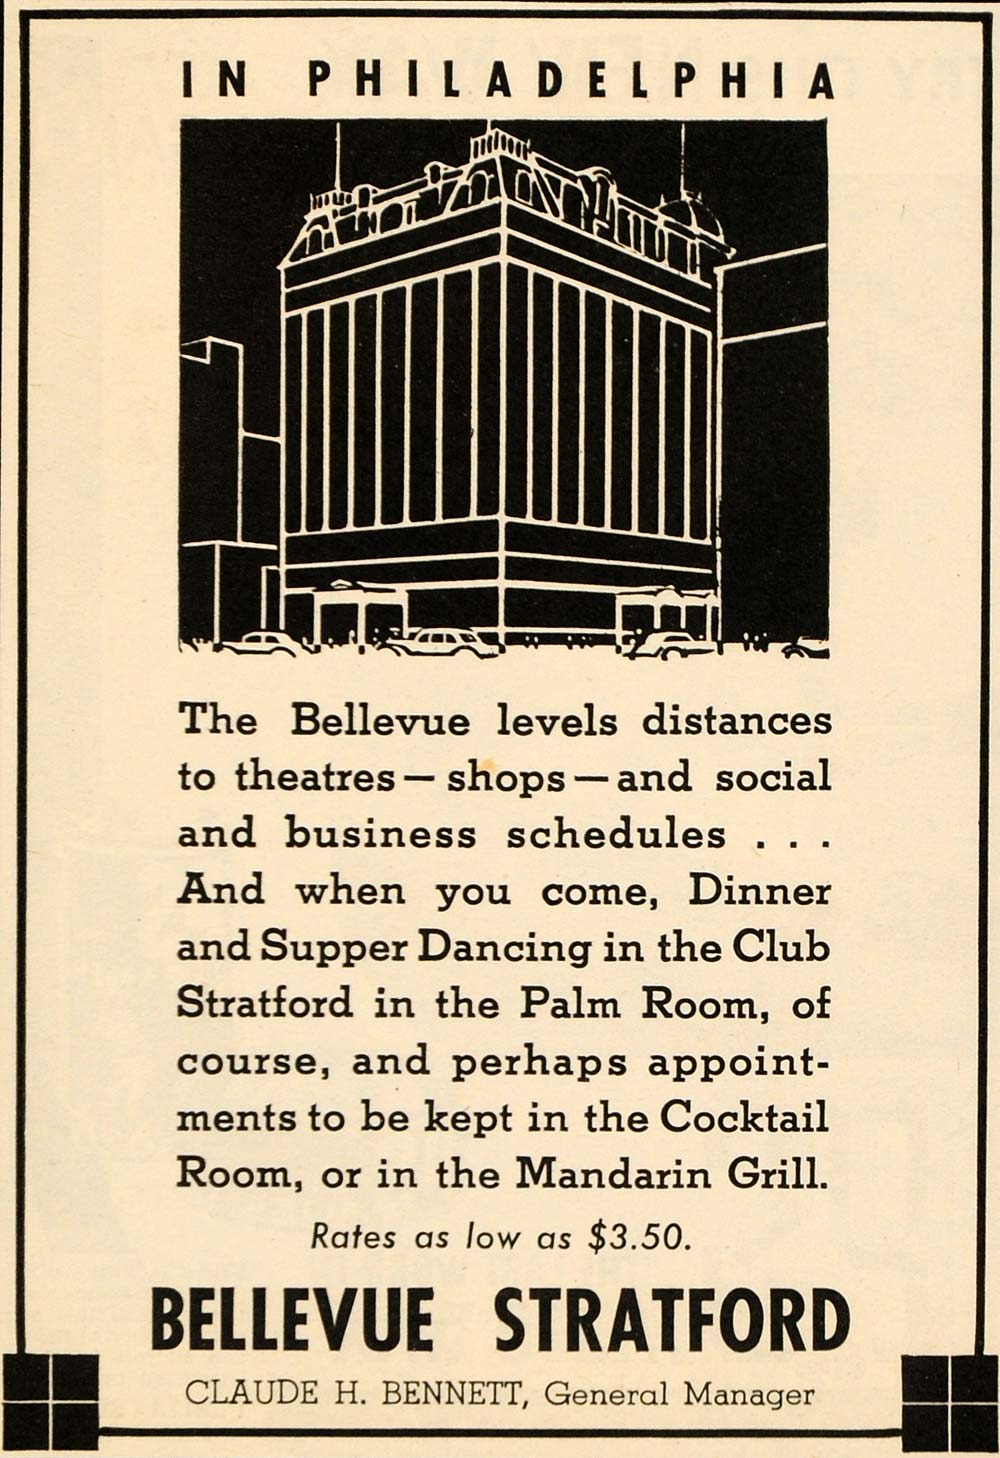 1935 Ad Bellevue Stratford Hotel Bennett Philadelphia - ORIGINAL ATJ1